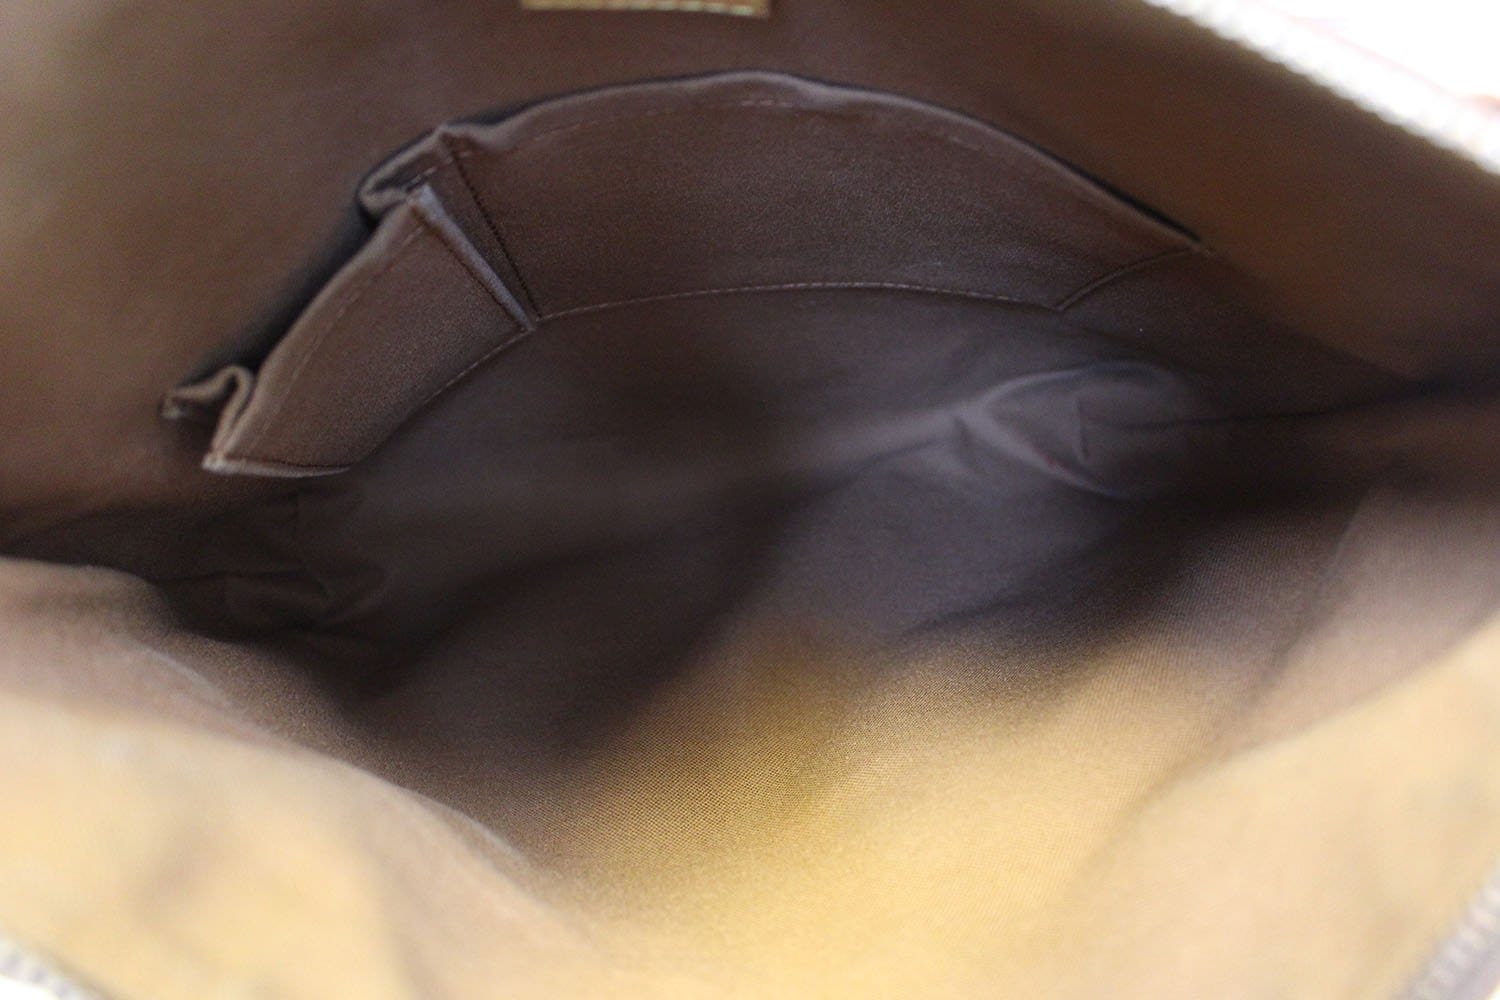 Odéon MM Monogram in Brown - Handbags M45355, LOUIS VUITTON ®